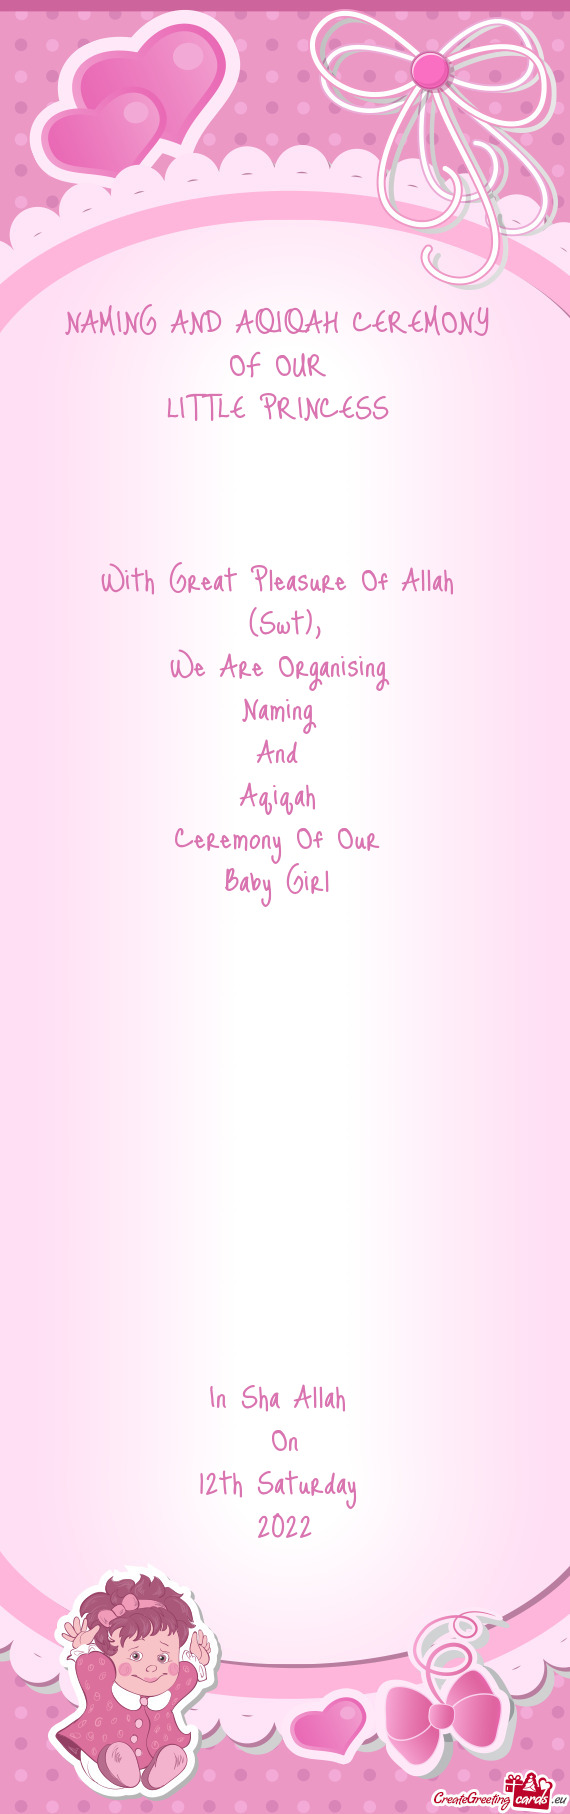 We Are Organising